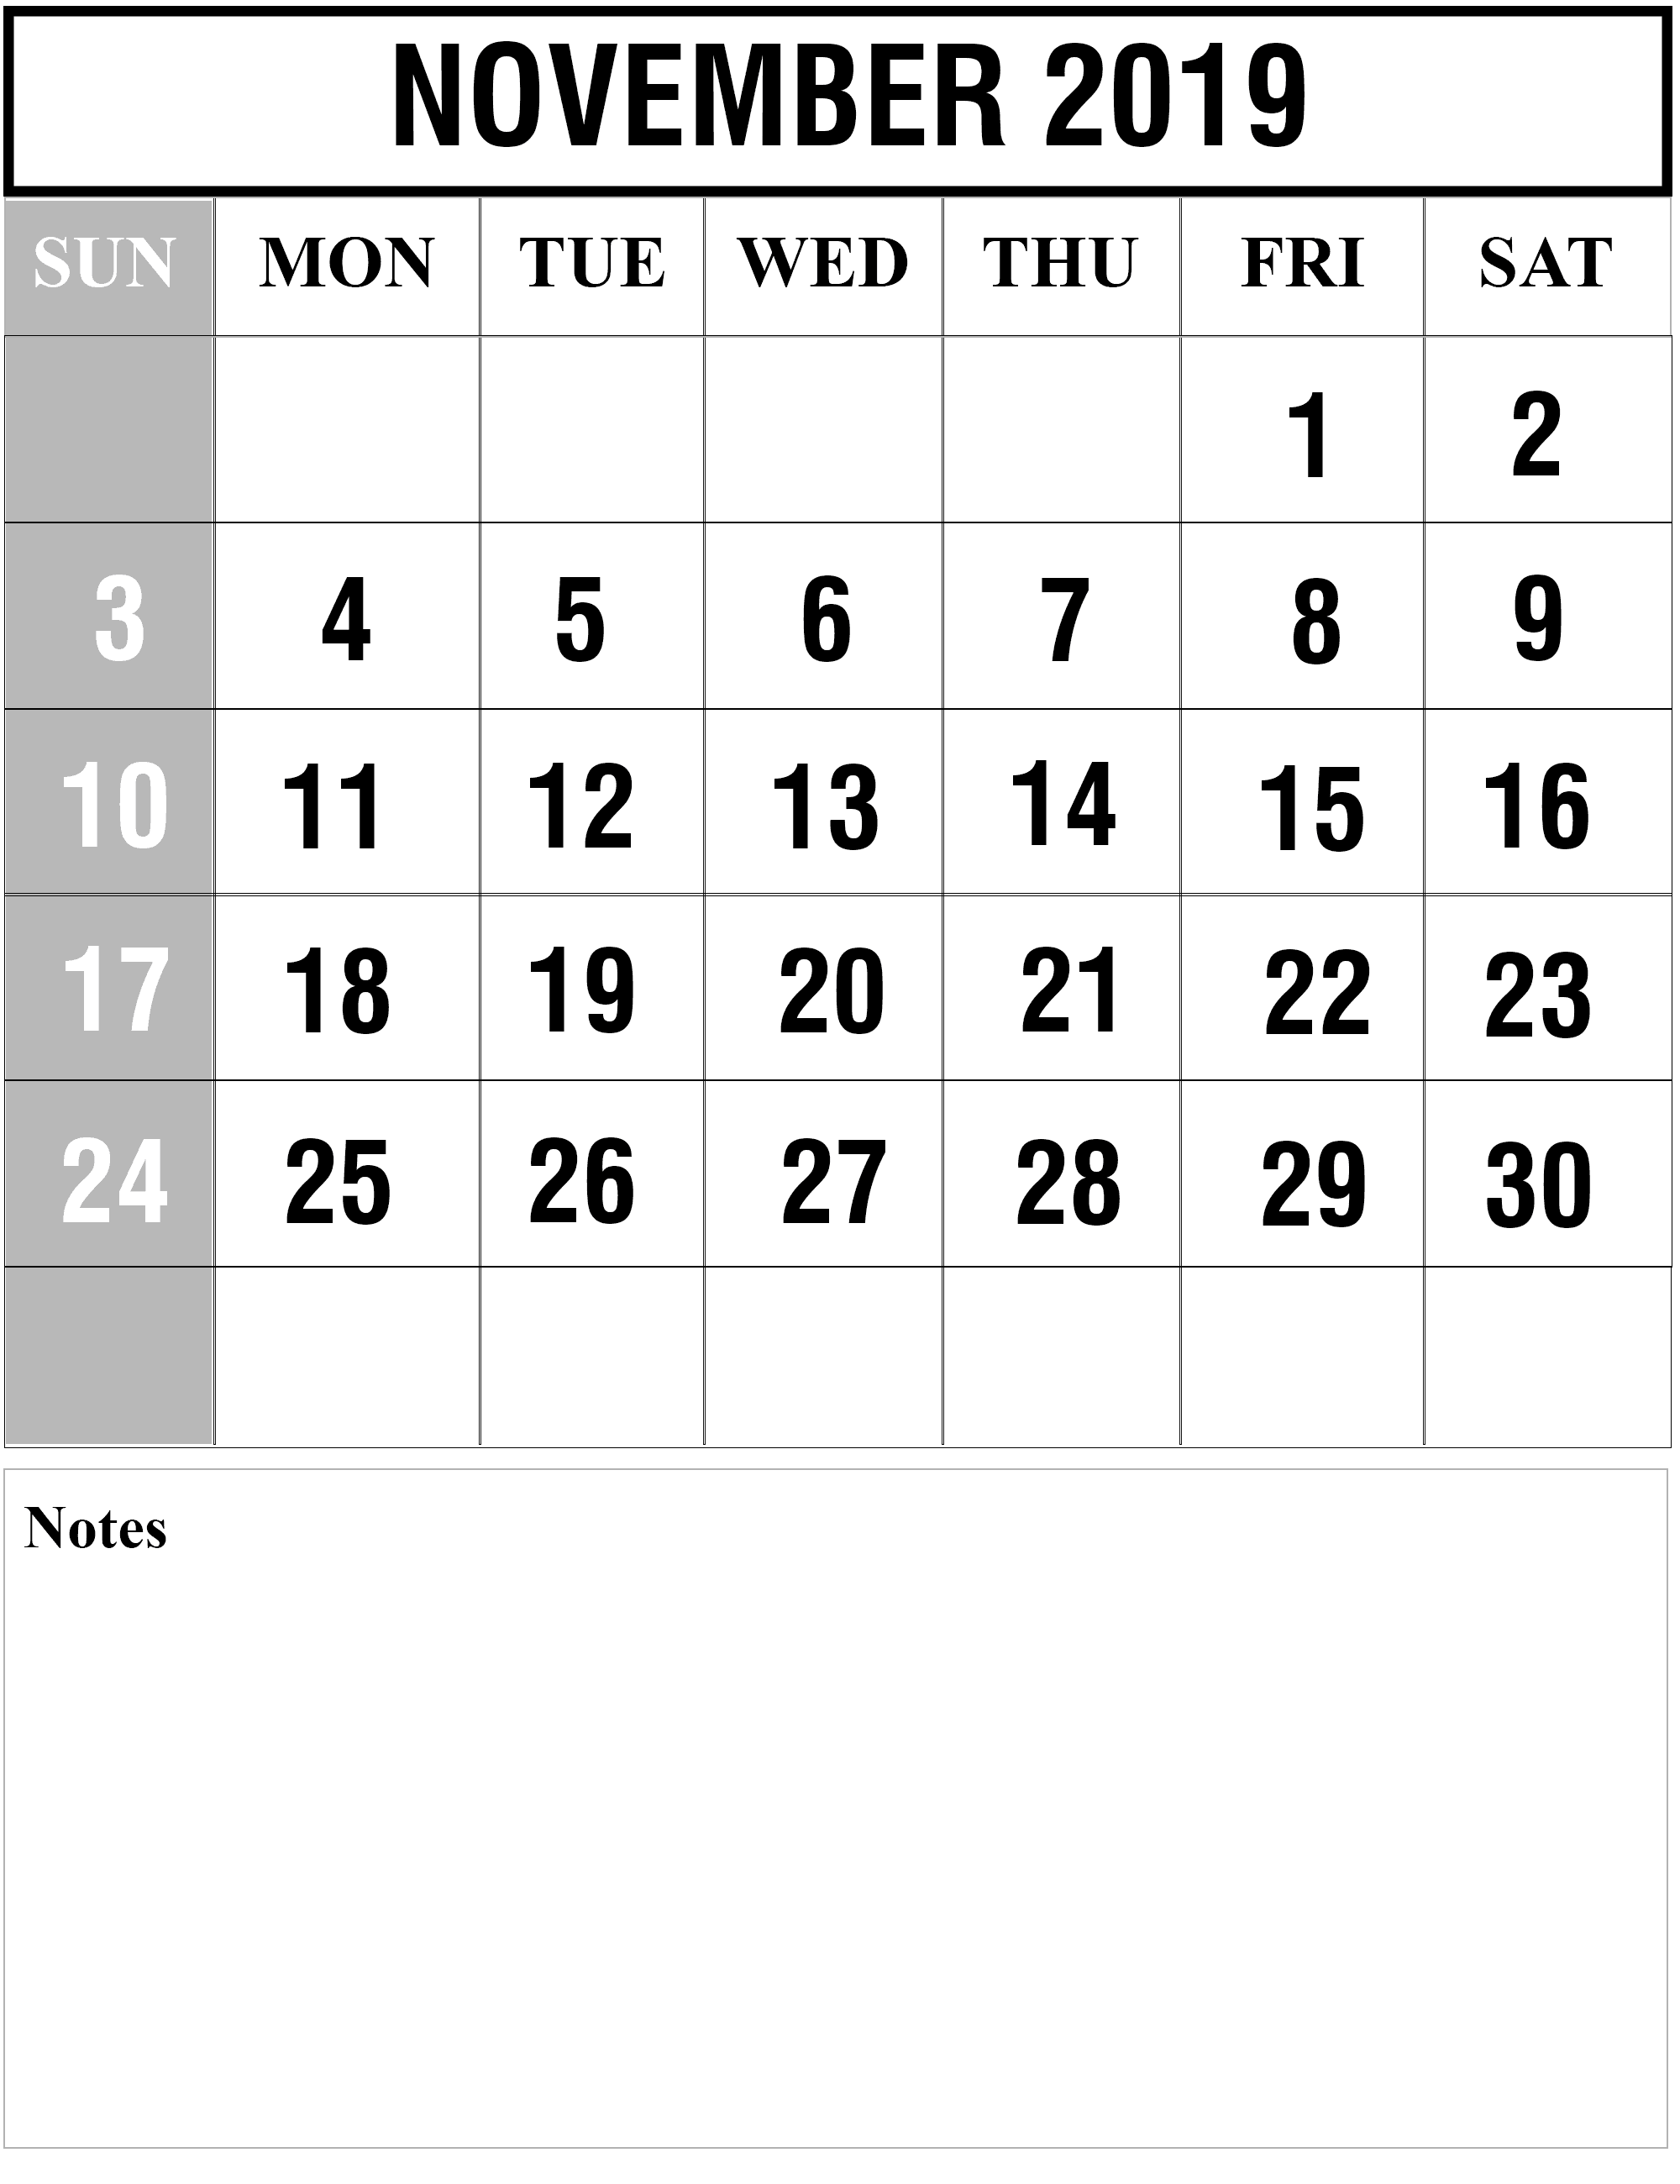 November calendar 2019